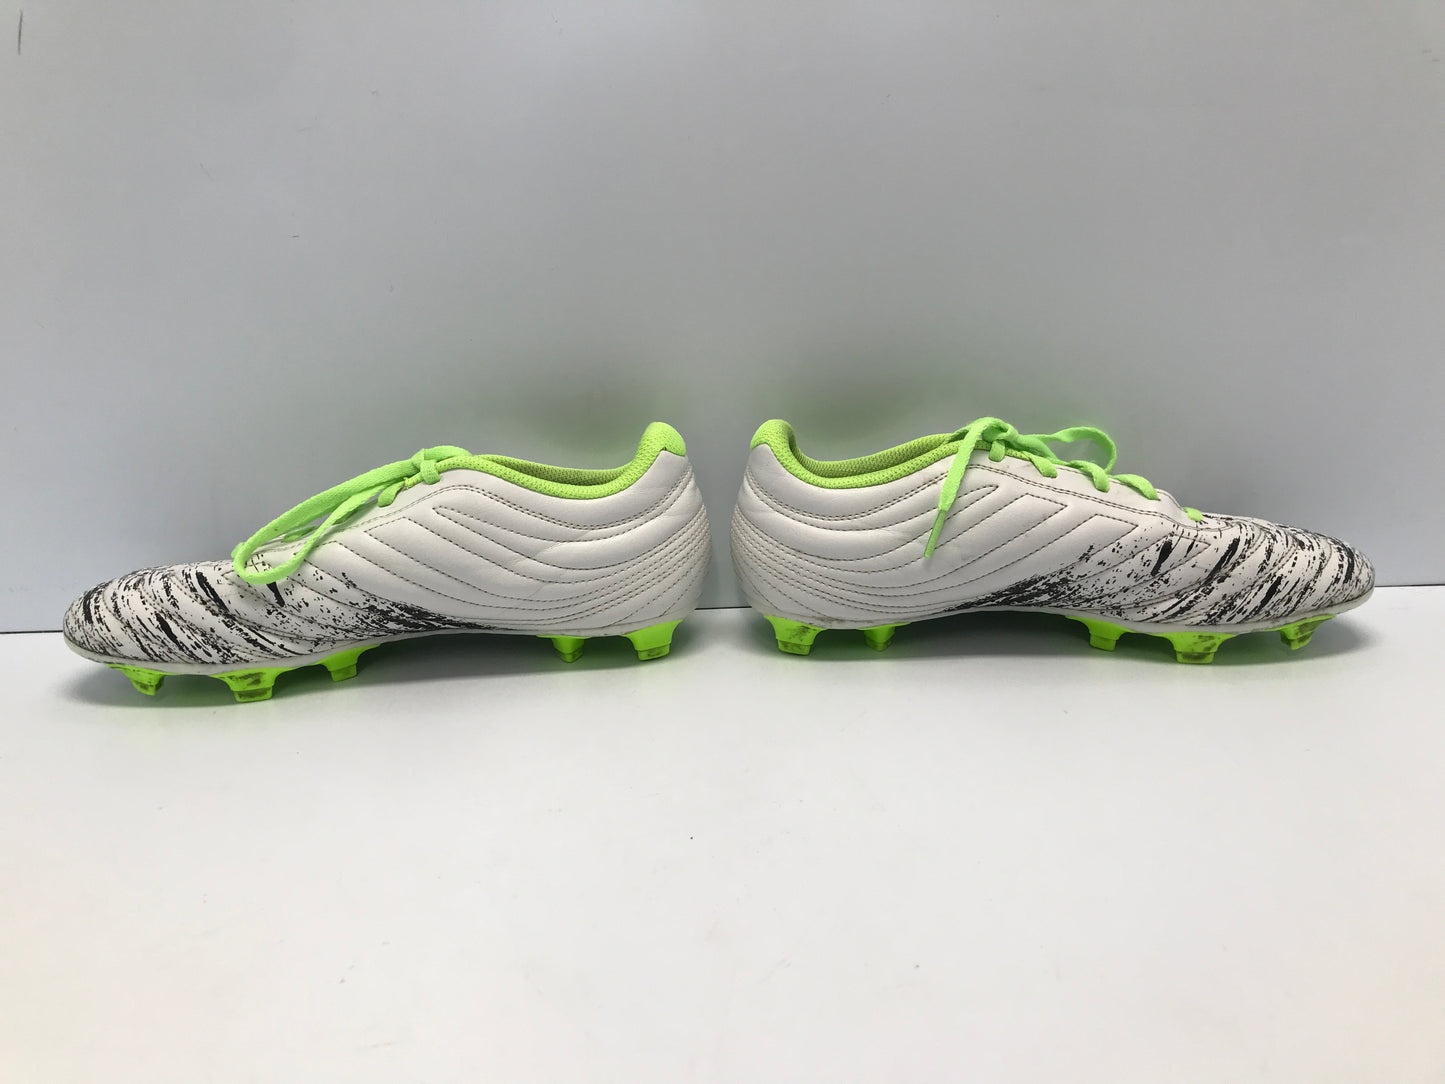 Soccer Shoes Cleats Men's Size 7.5 Adidas Copa White Black Lime Excellent